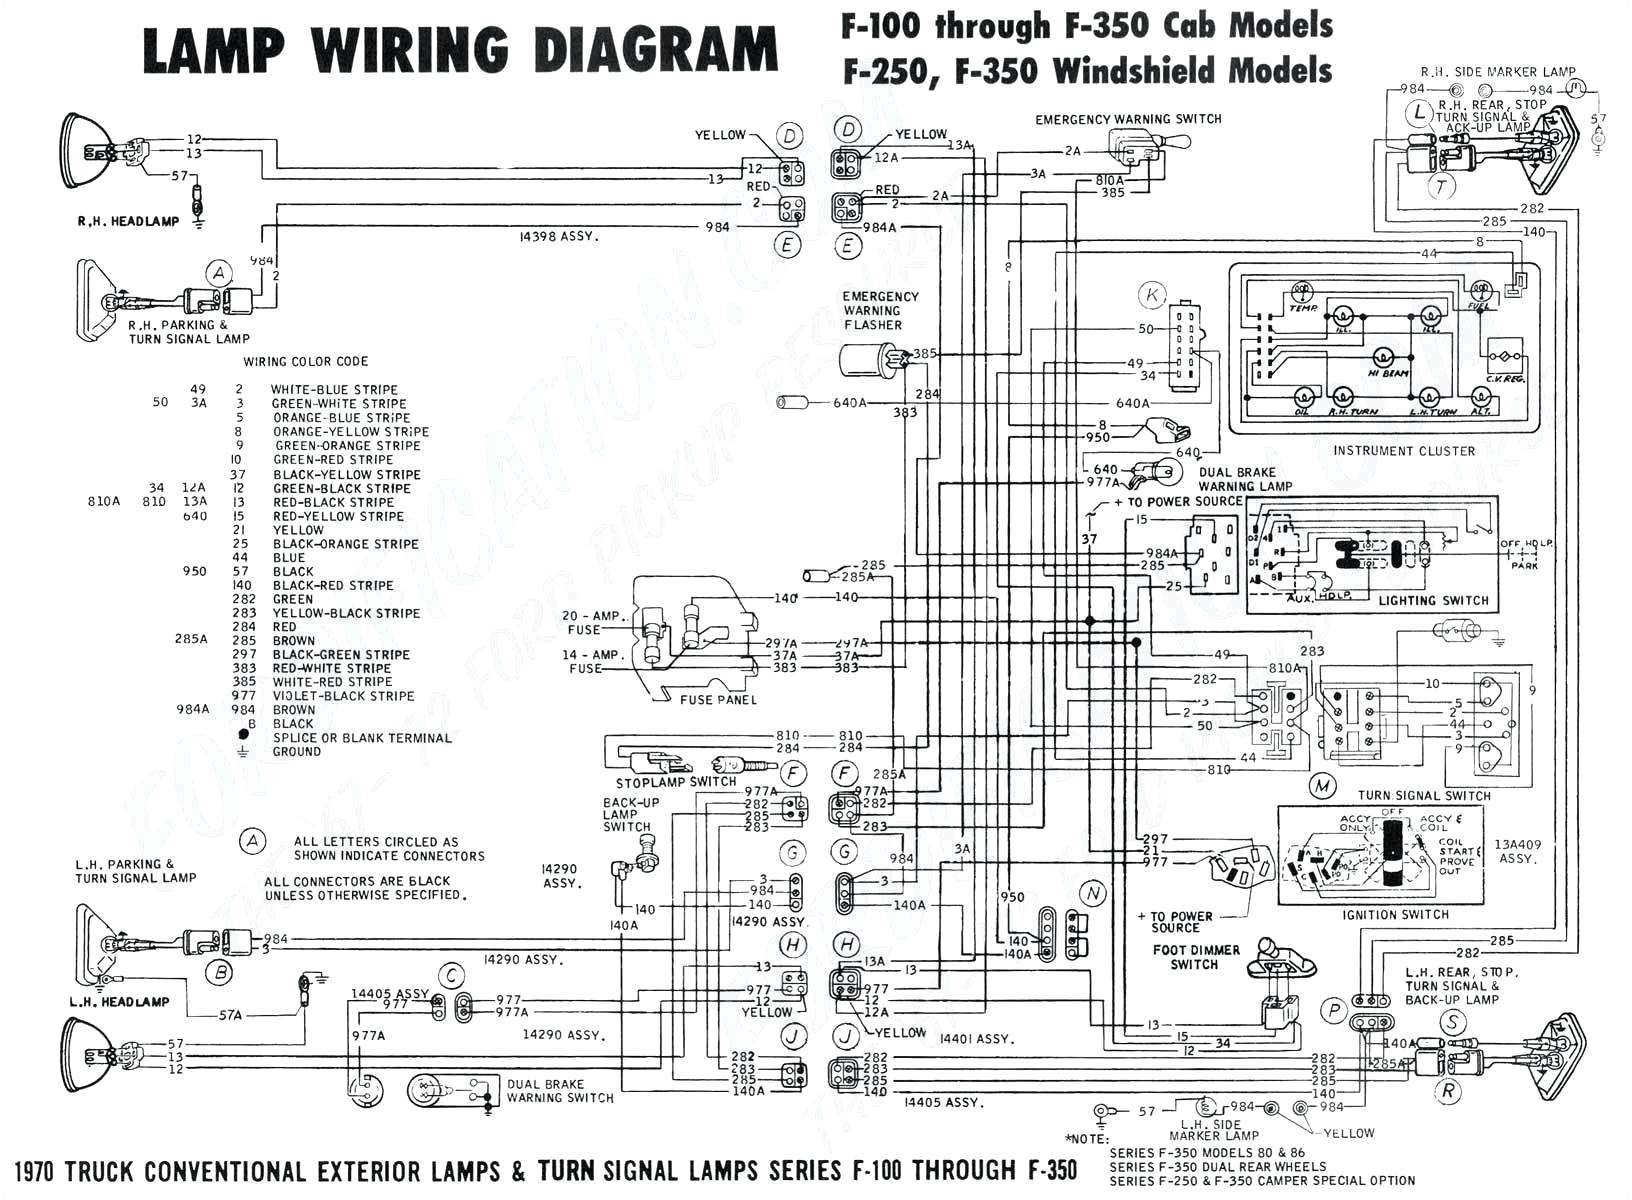 john deere x320 wiring diagram new john deere x320 wiring diagram list john deere x320 wiring